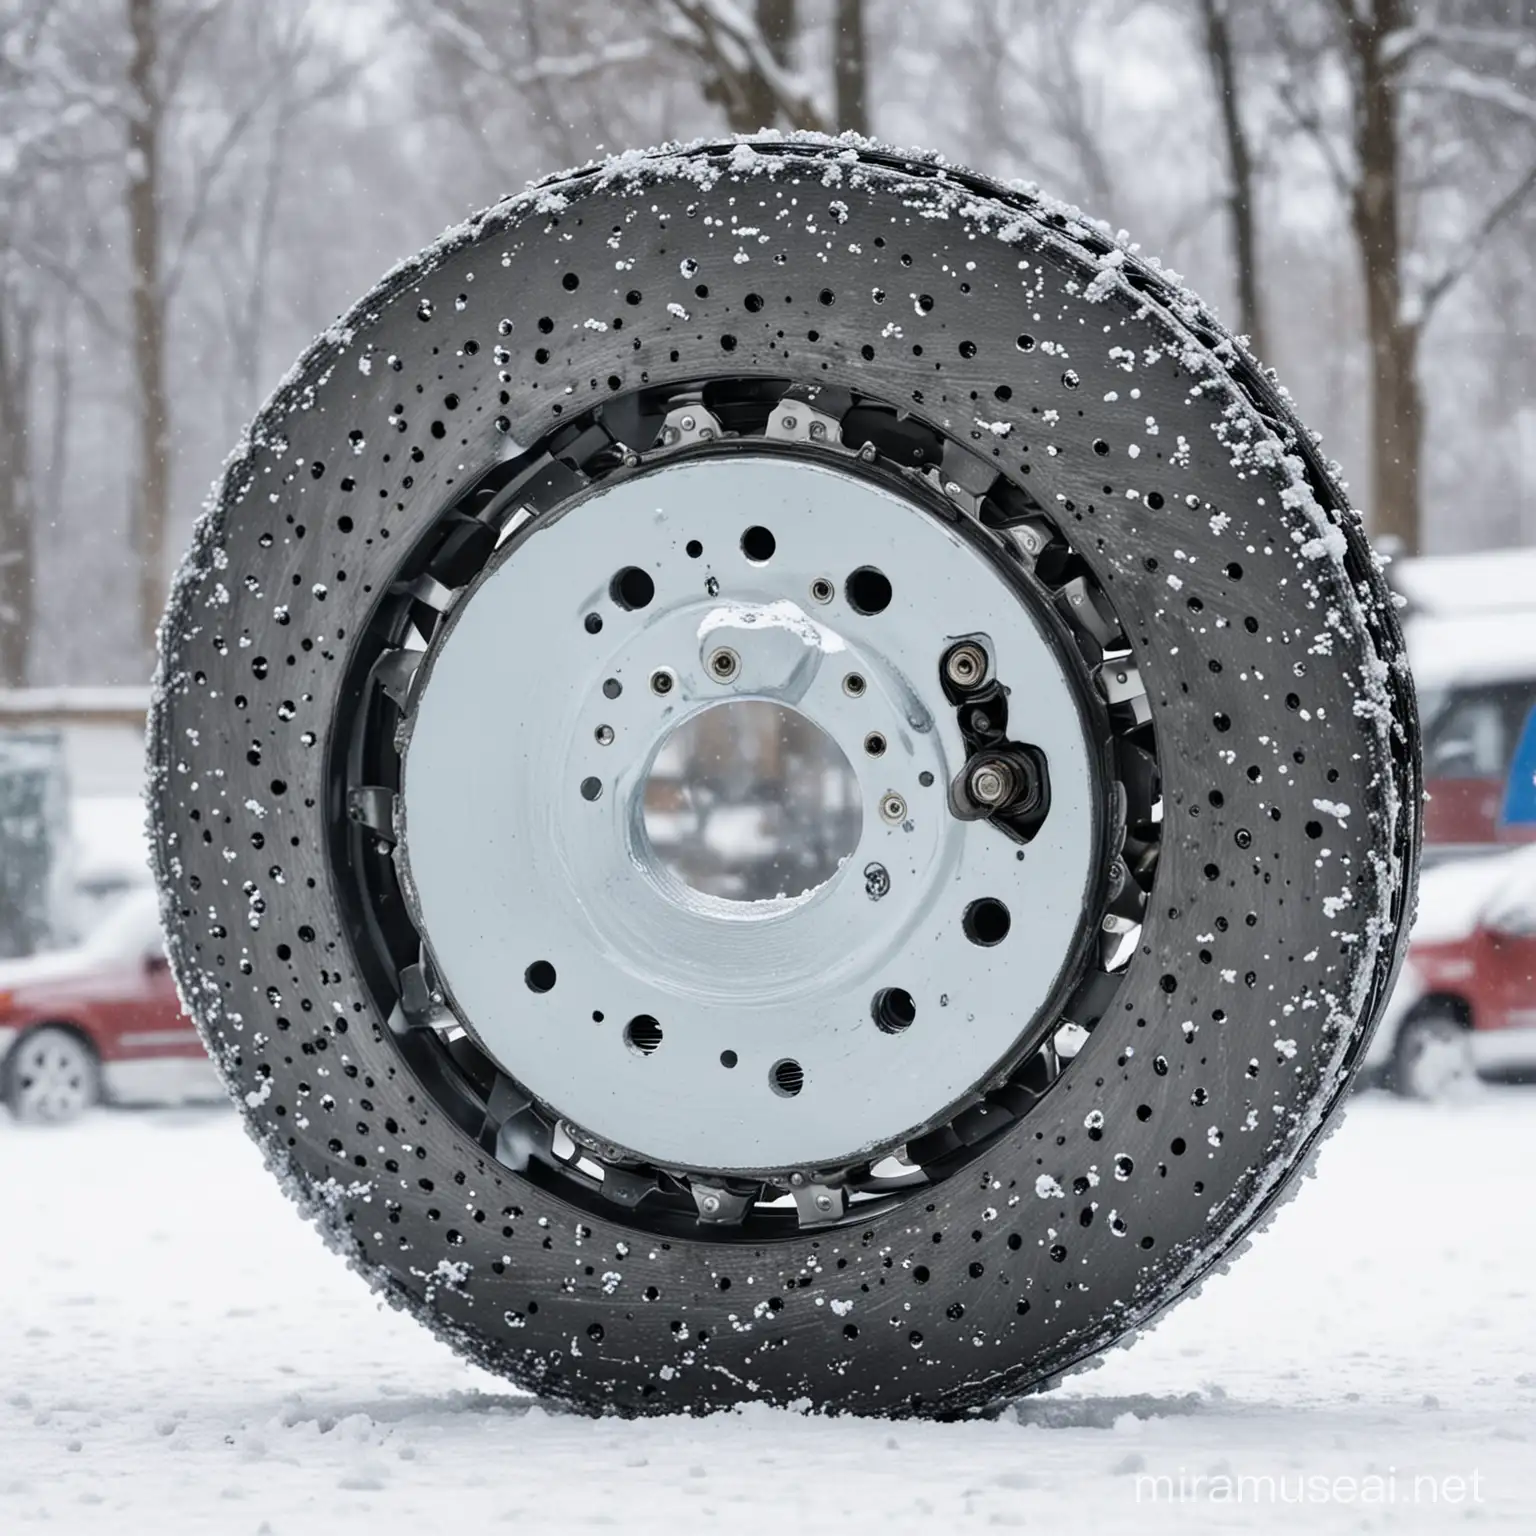 Winter Automotive Scene Snowy Landscape with Car Brake Discs Display